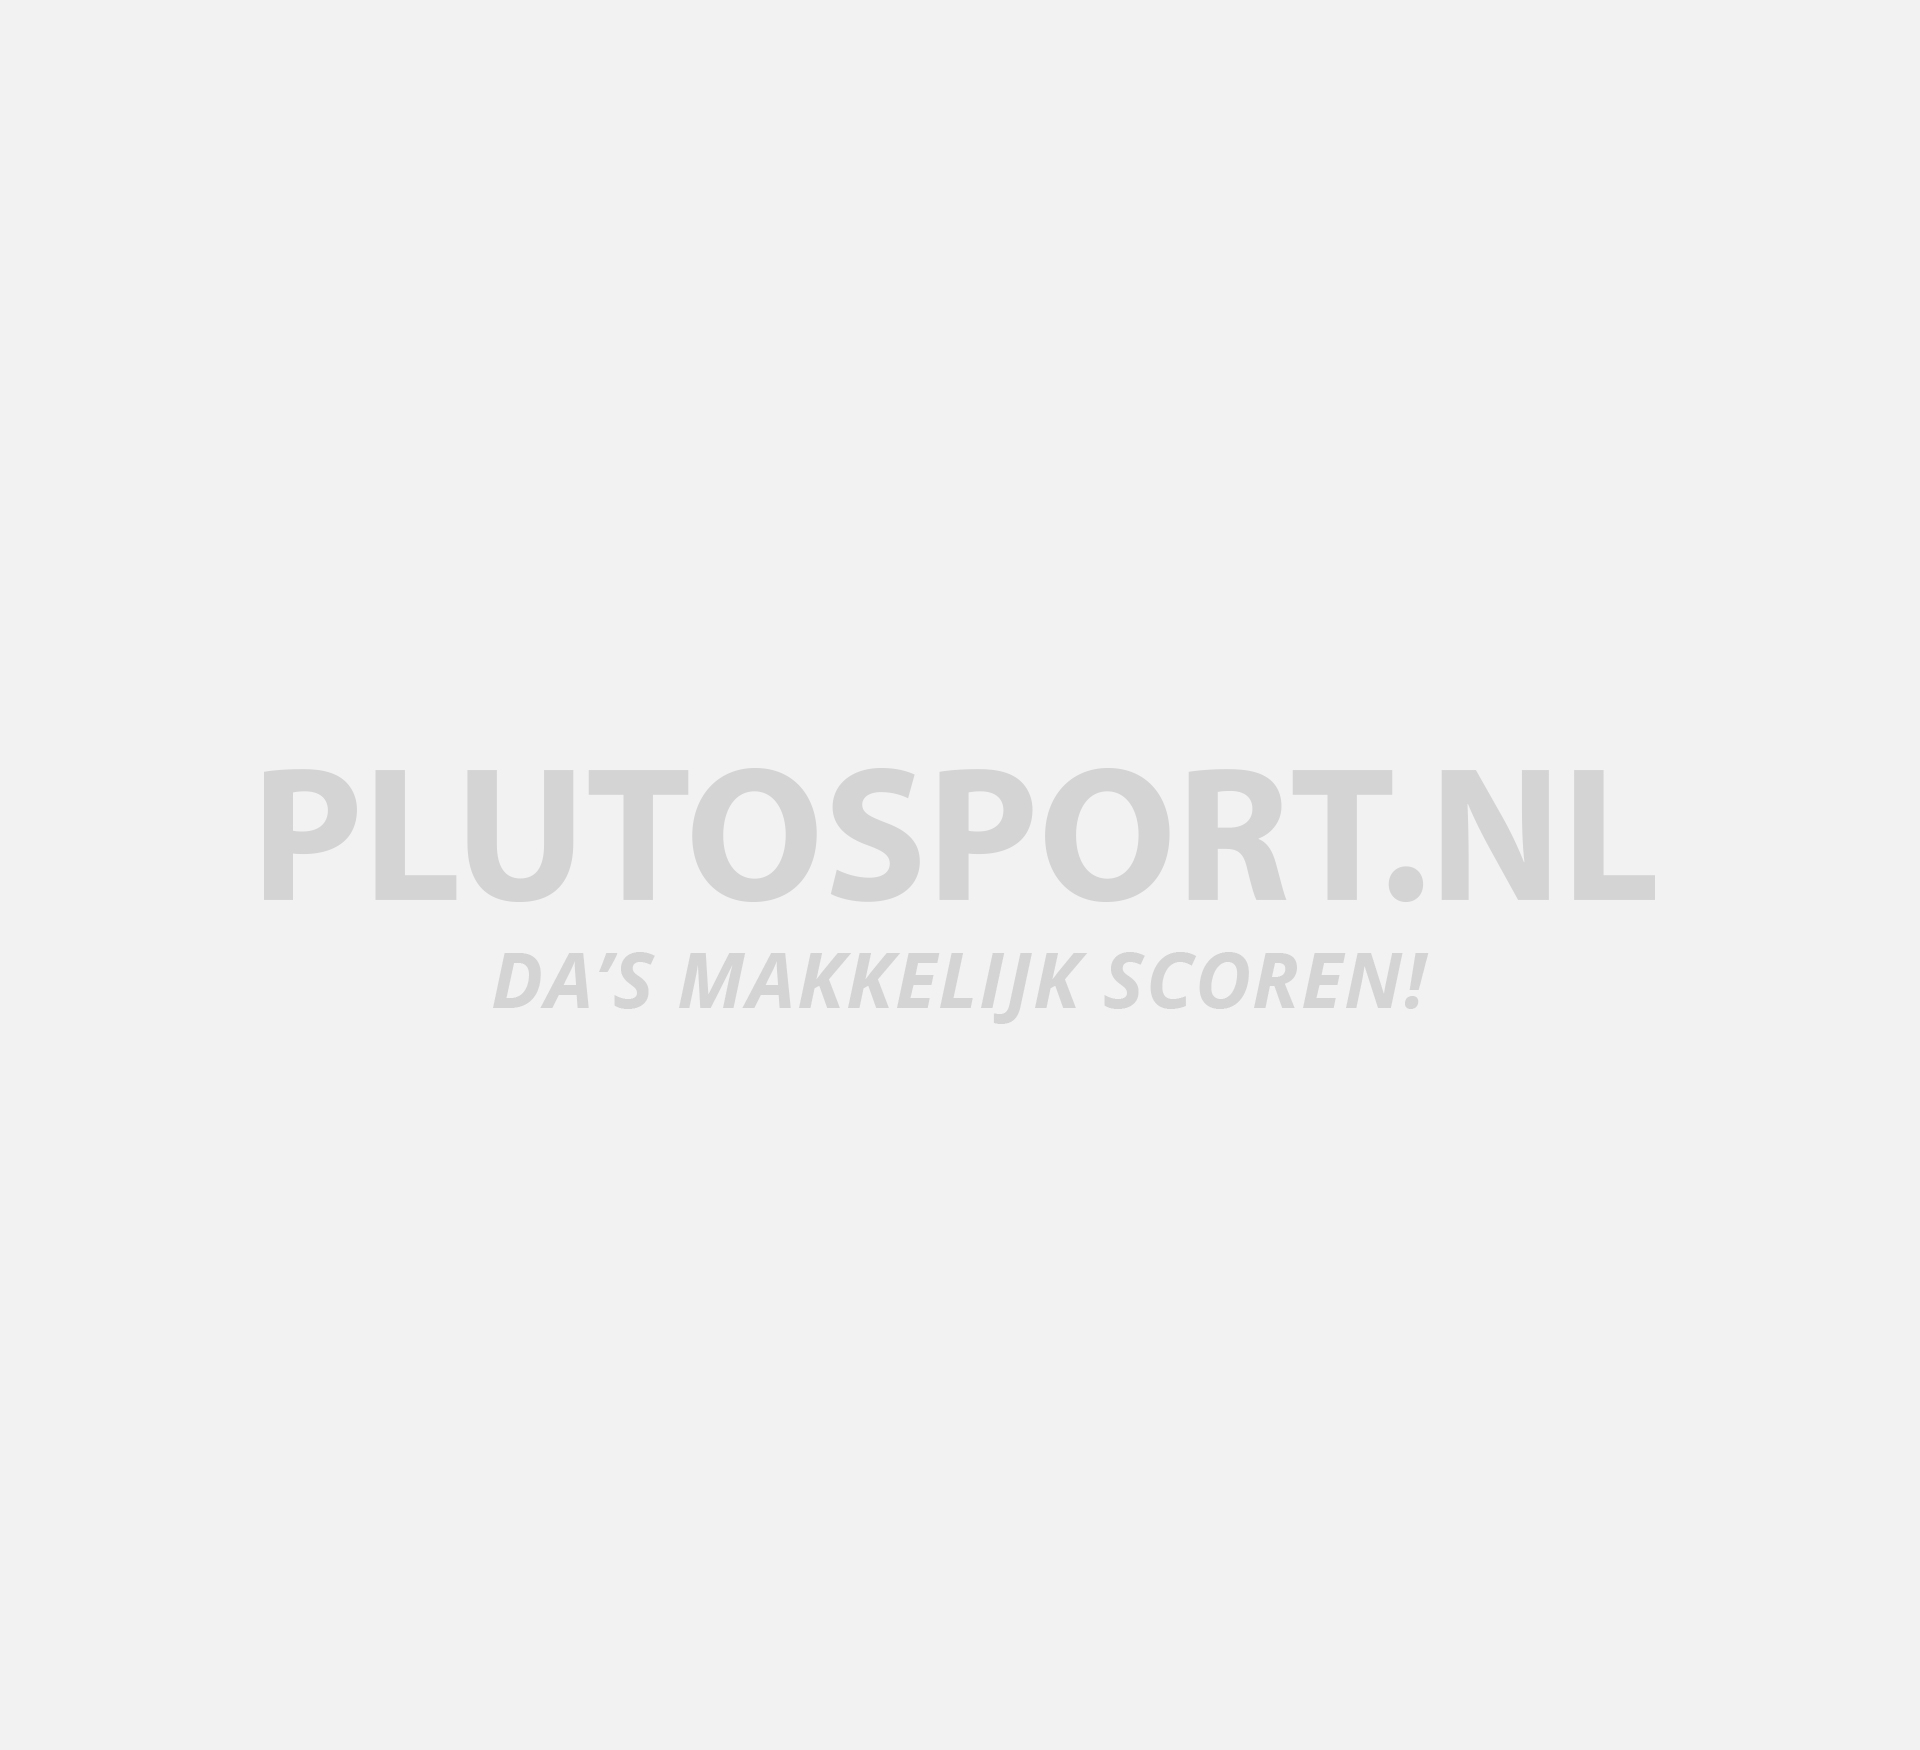 Champion - | Plutosport